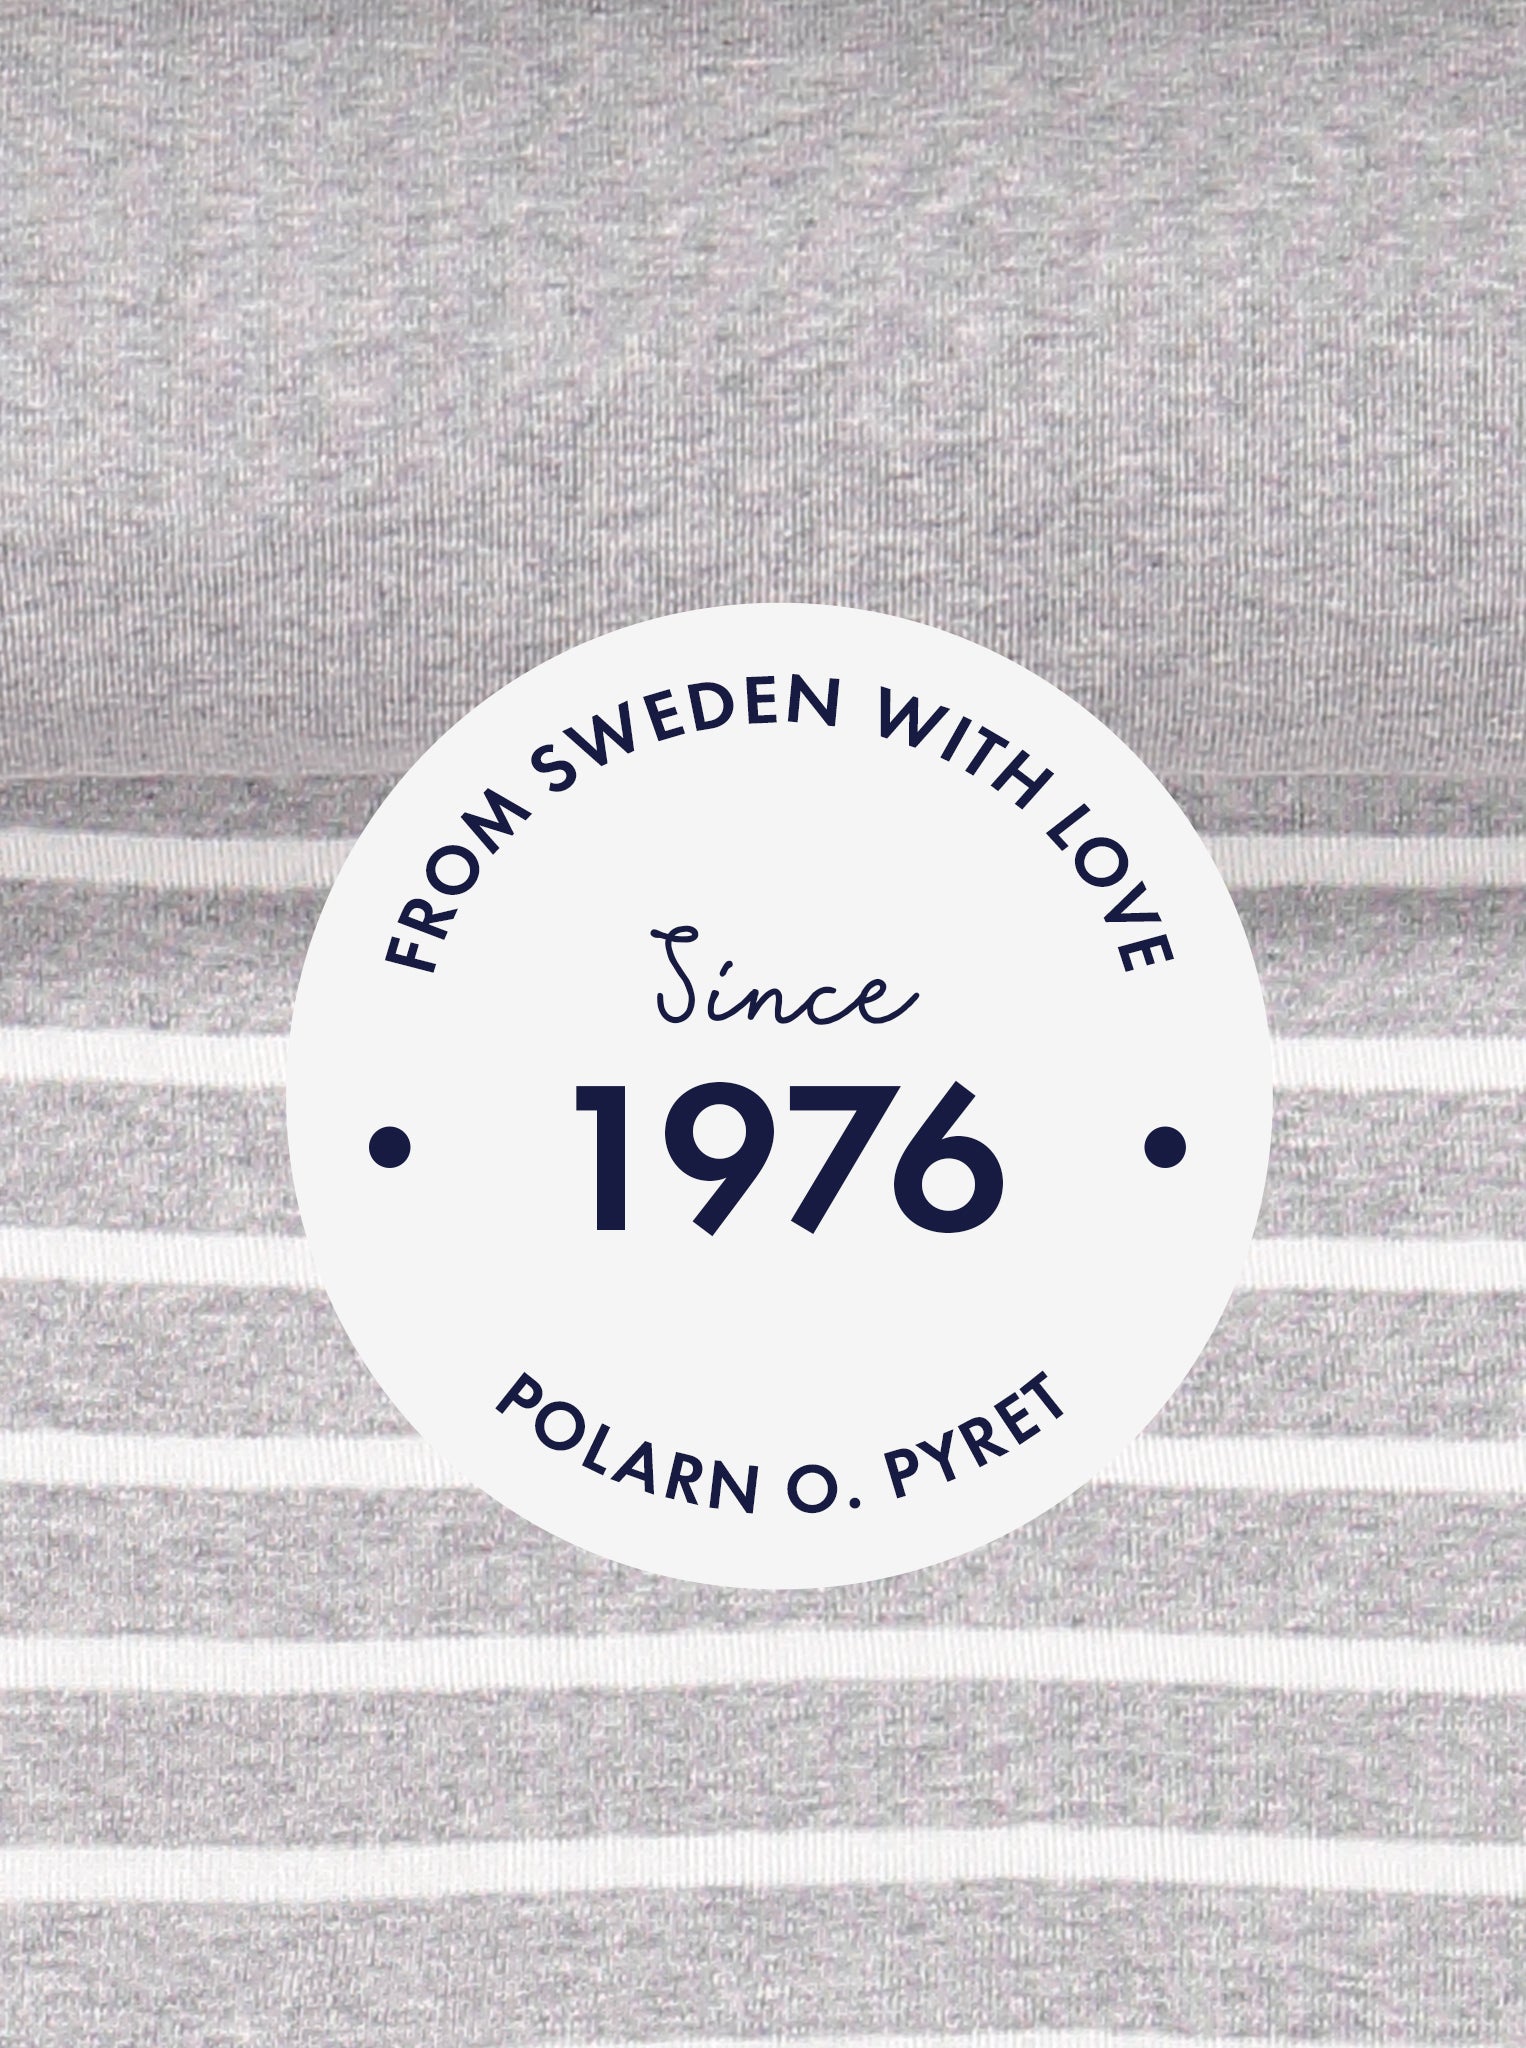  PO.P 1976 logo in grey and white